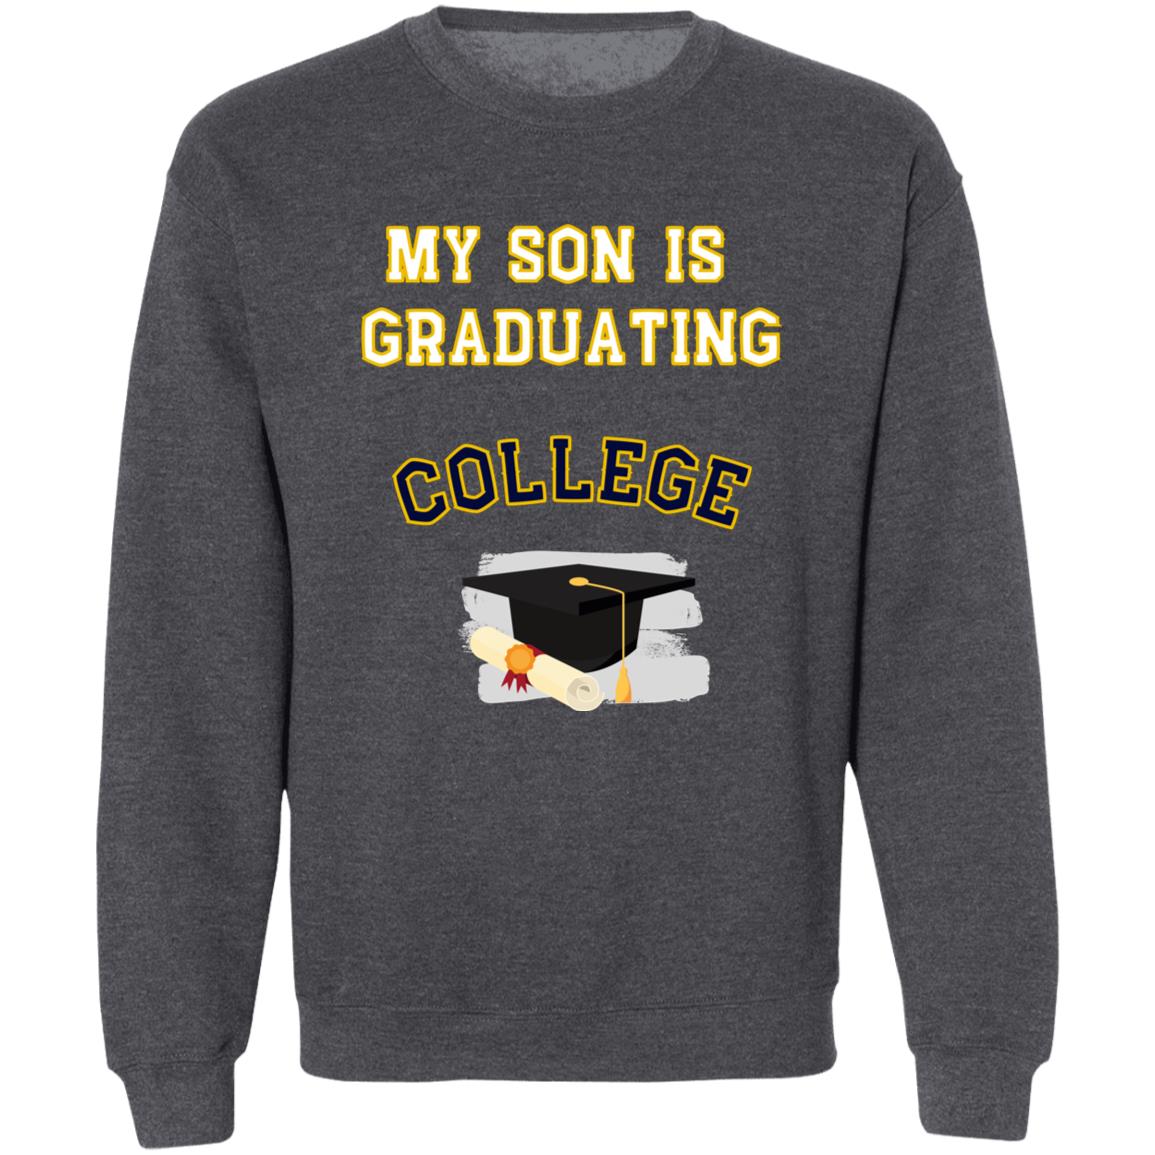 Son Graduating College Sweatshirt